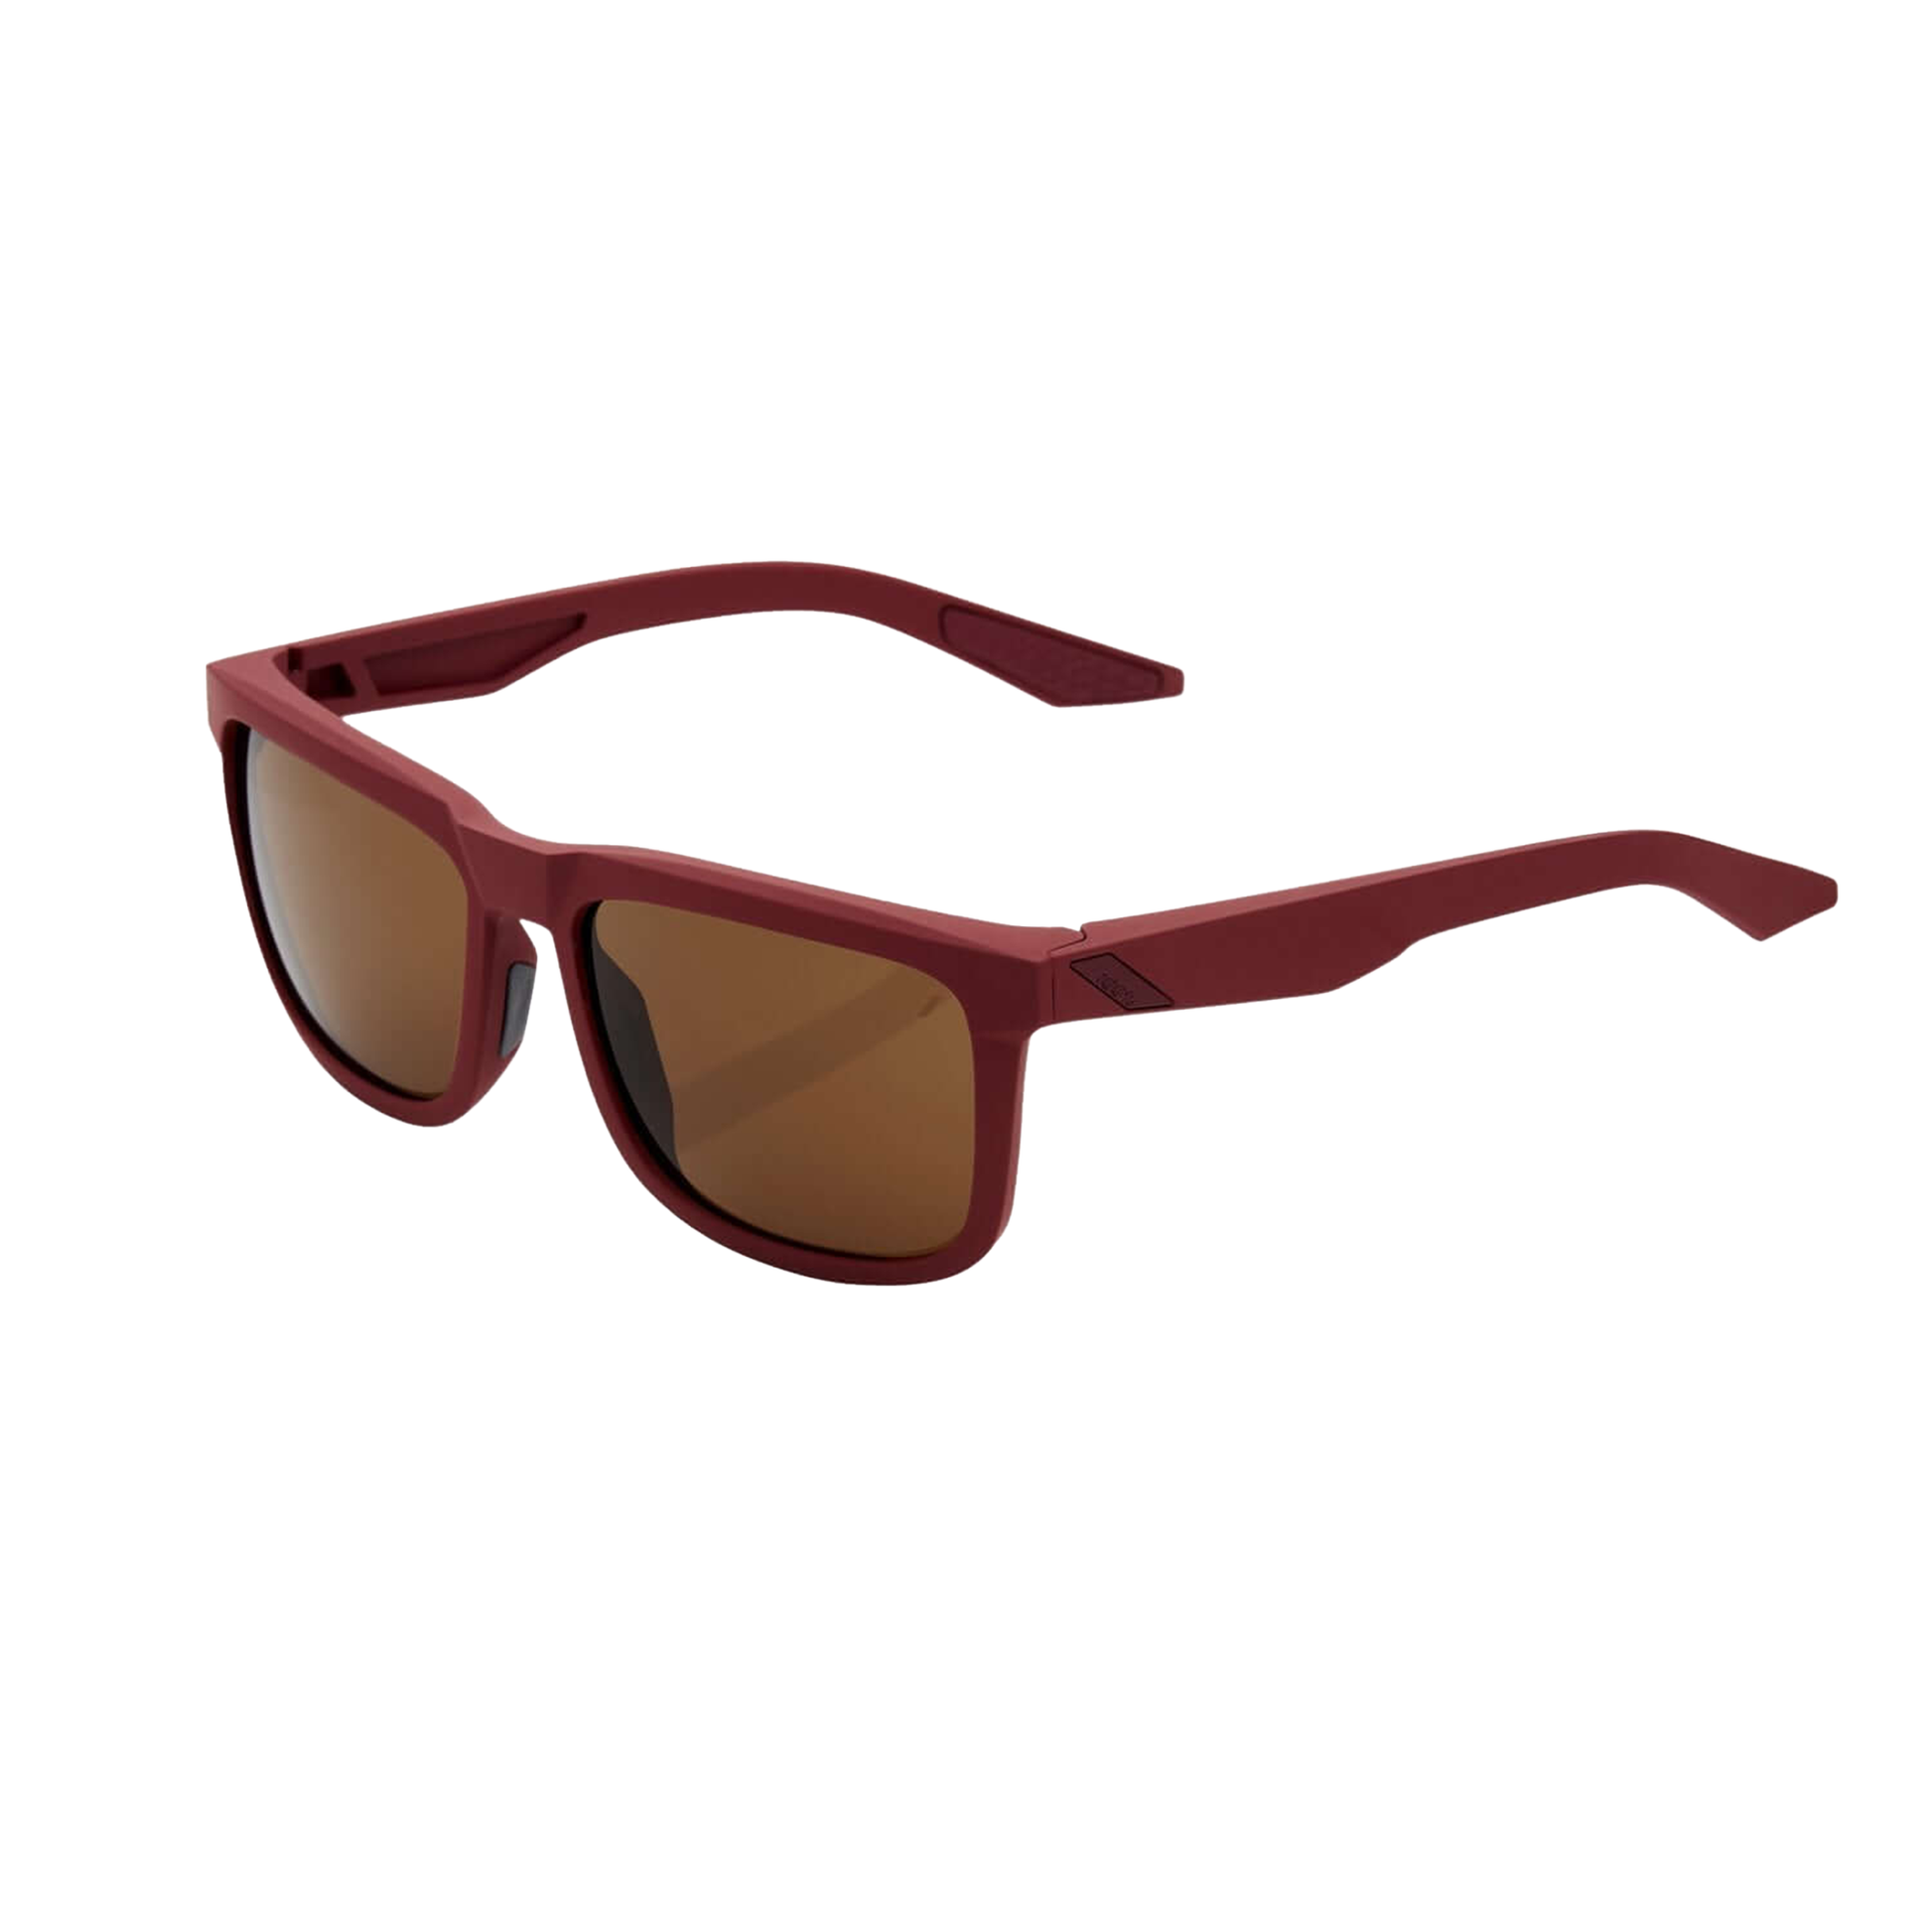 100% Blake Sunglasses Soft Tact Crimson / Bronze Sunglasses